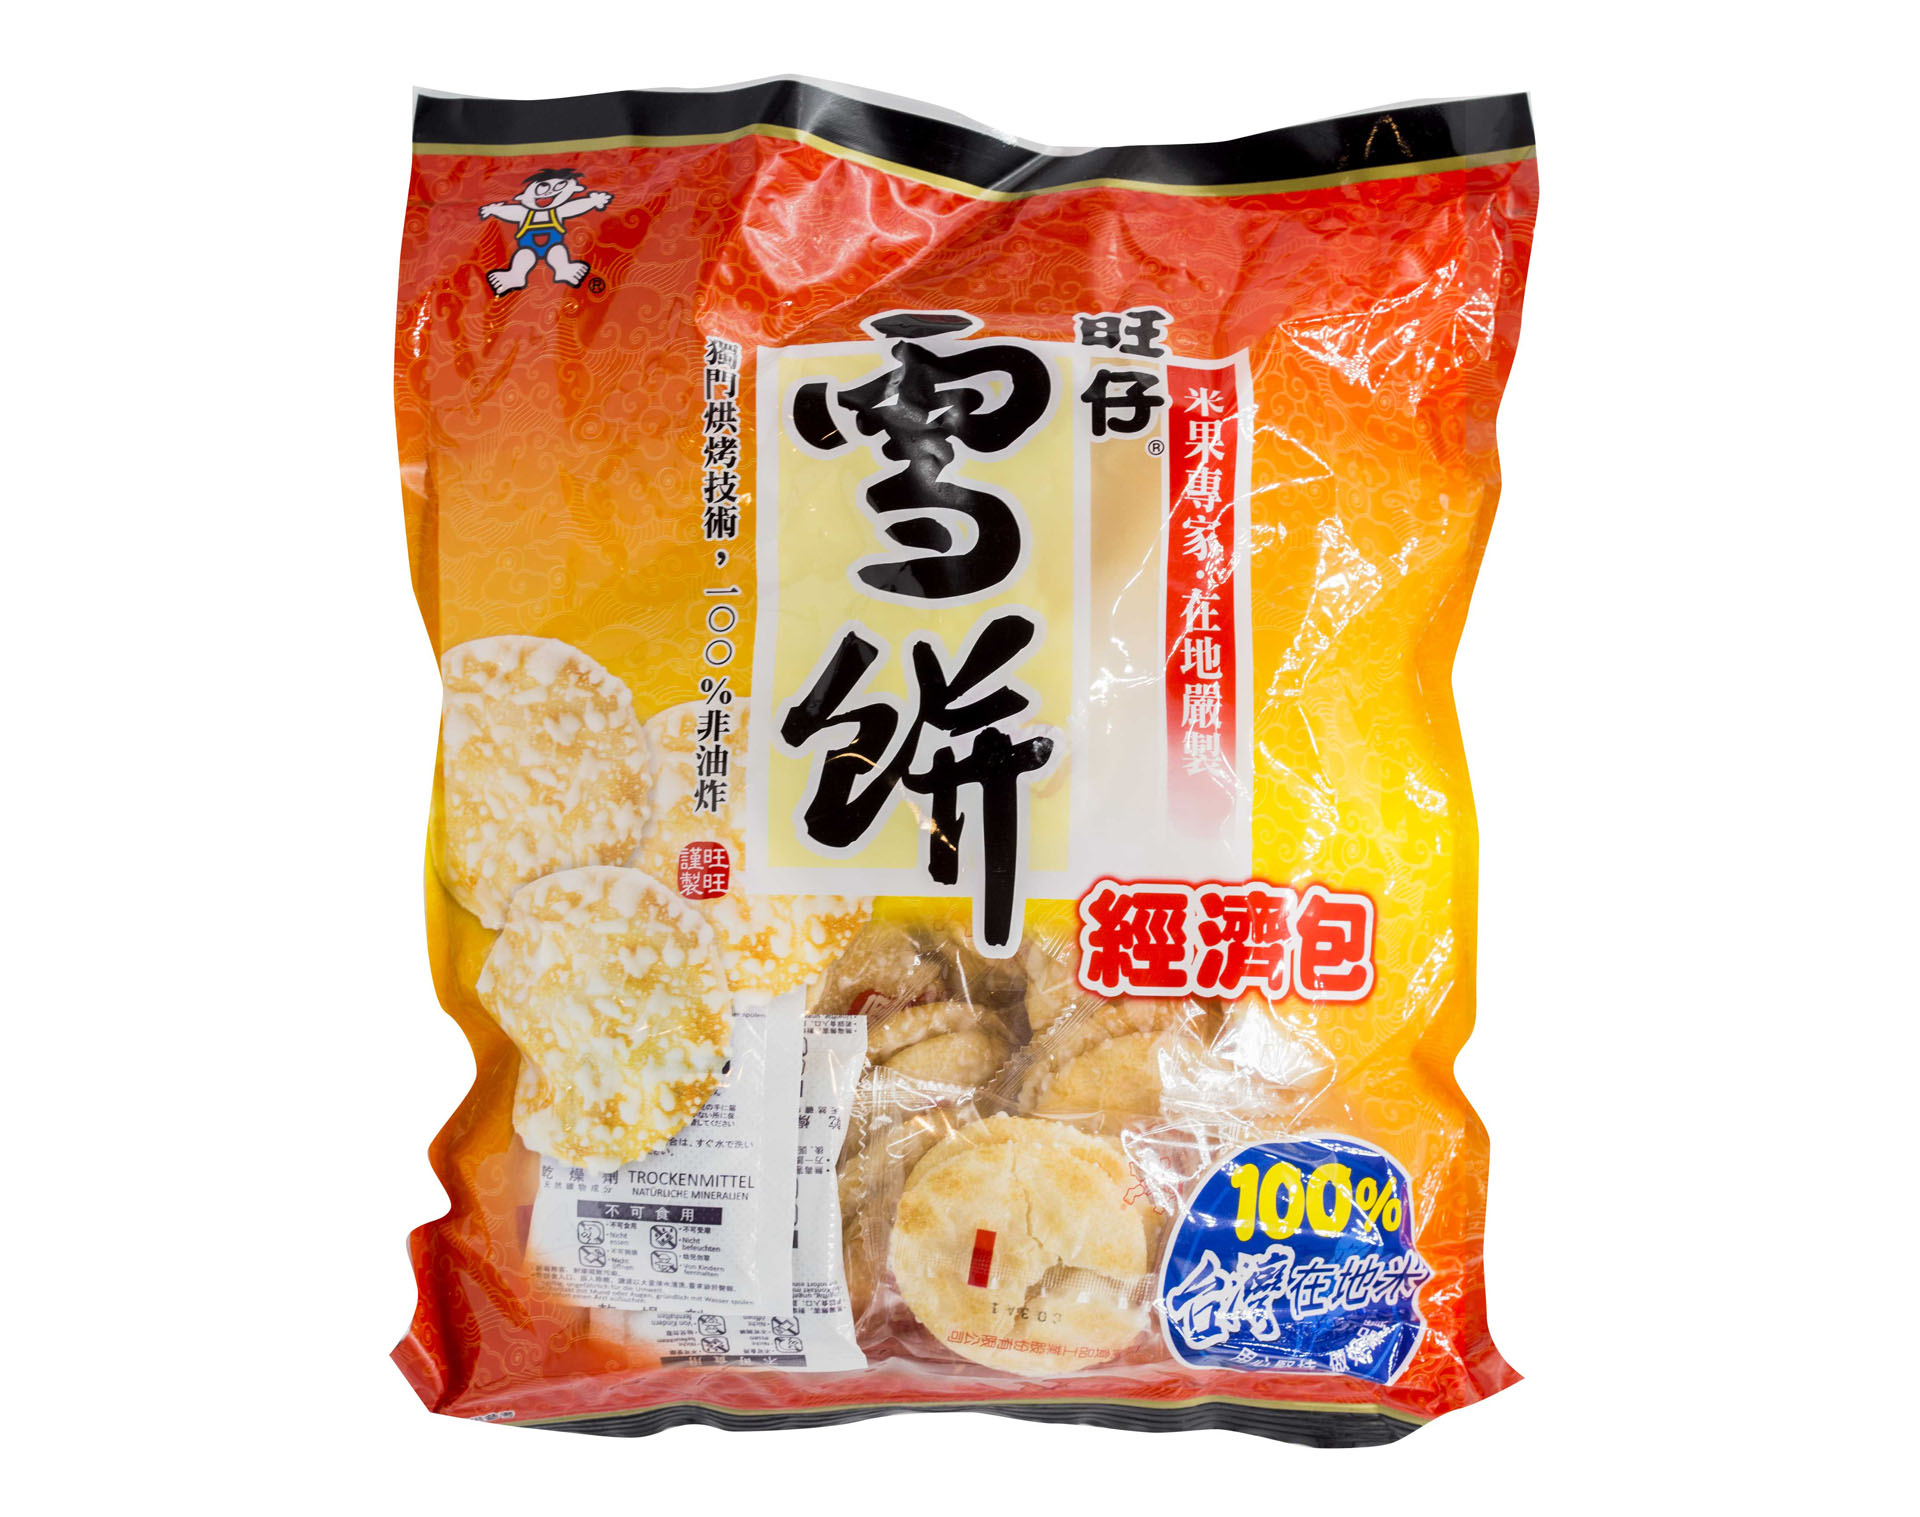 旺旺 雪餅 (經濟包) Want Want Shelly Senbei Rice Cracker (Original)